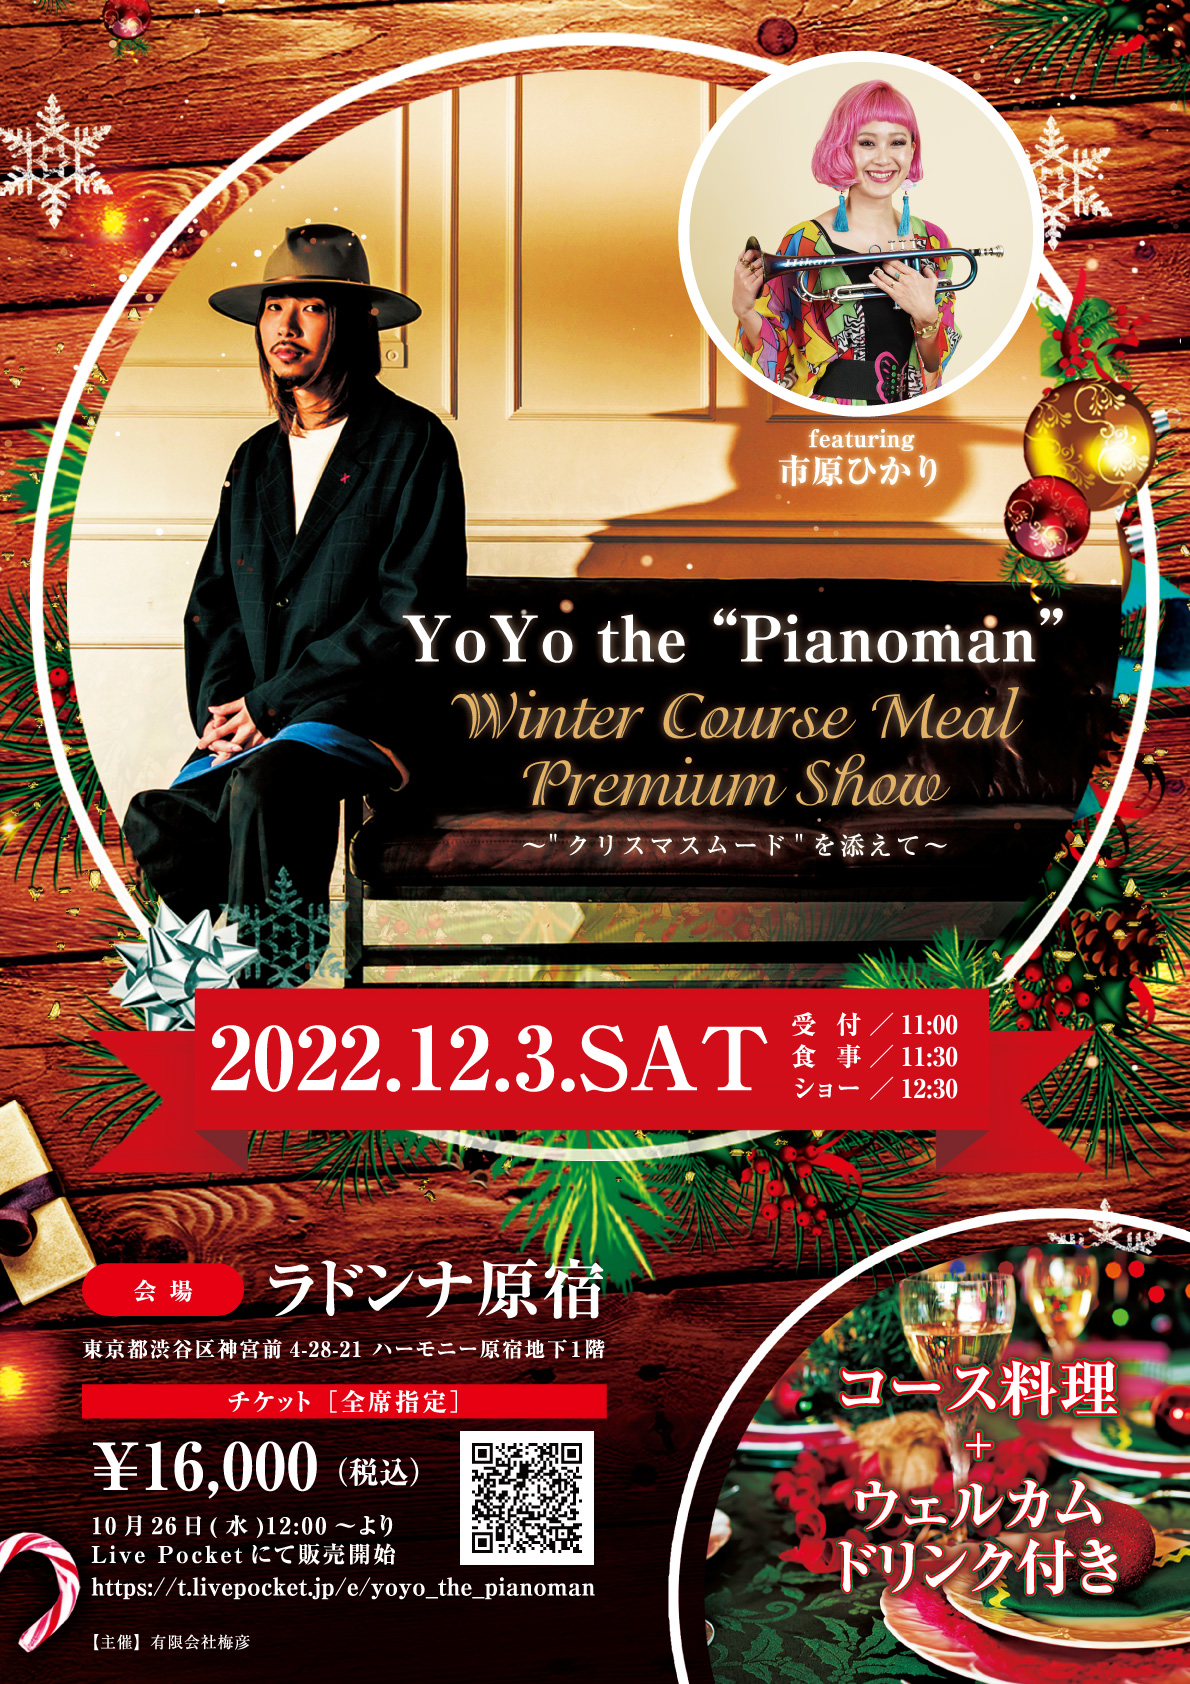 YoYo the "Pianoman" Premium Dinner Show